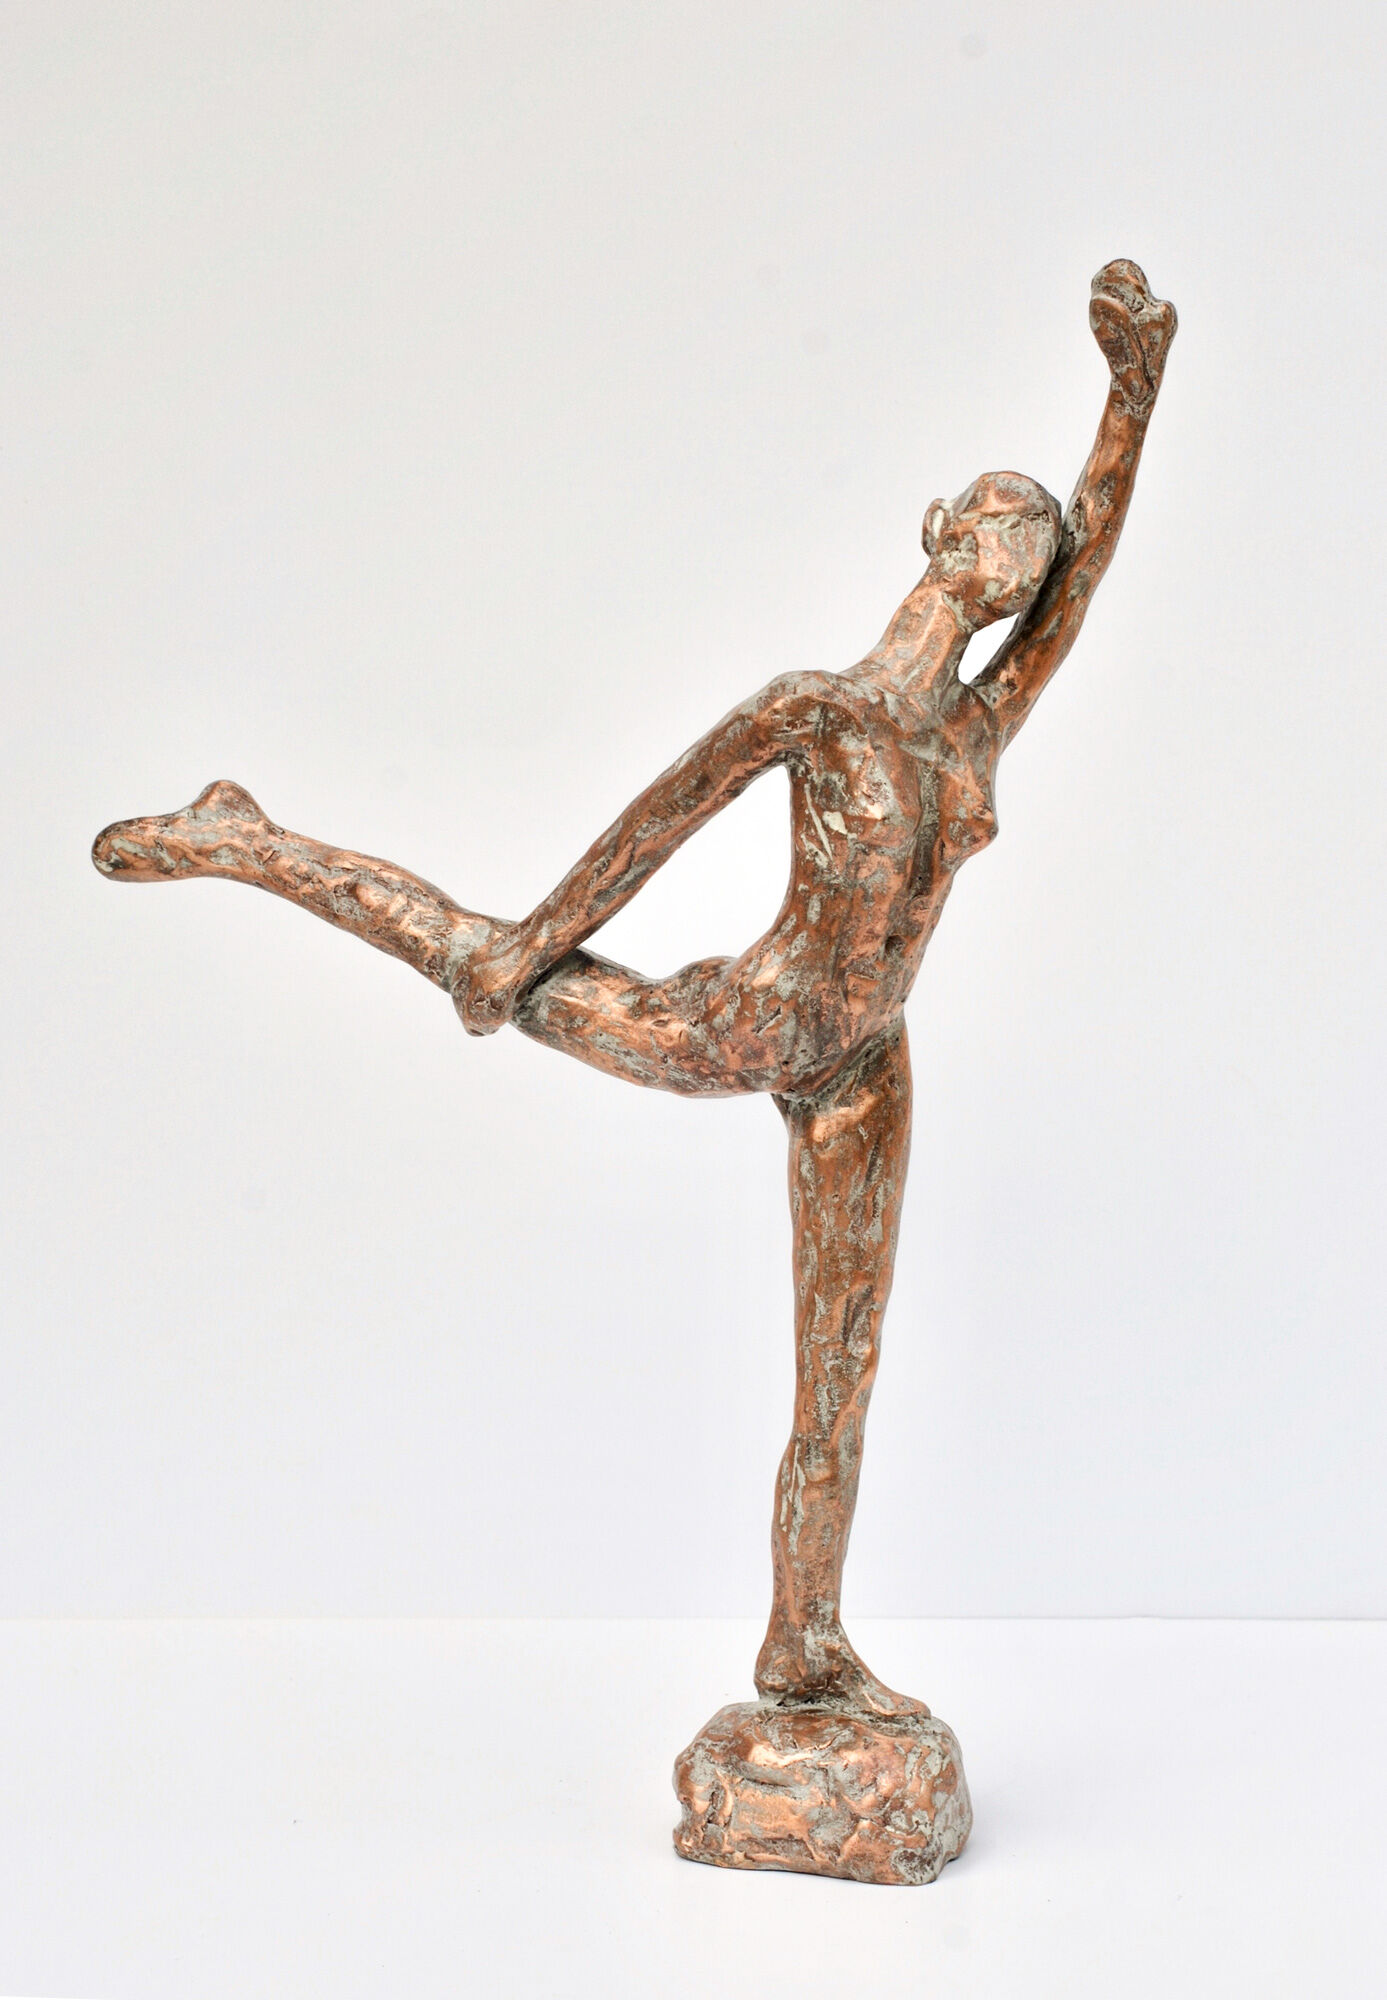 Sculpture "Pina - Freedom" (2019), bronze by Dagmar Vogt